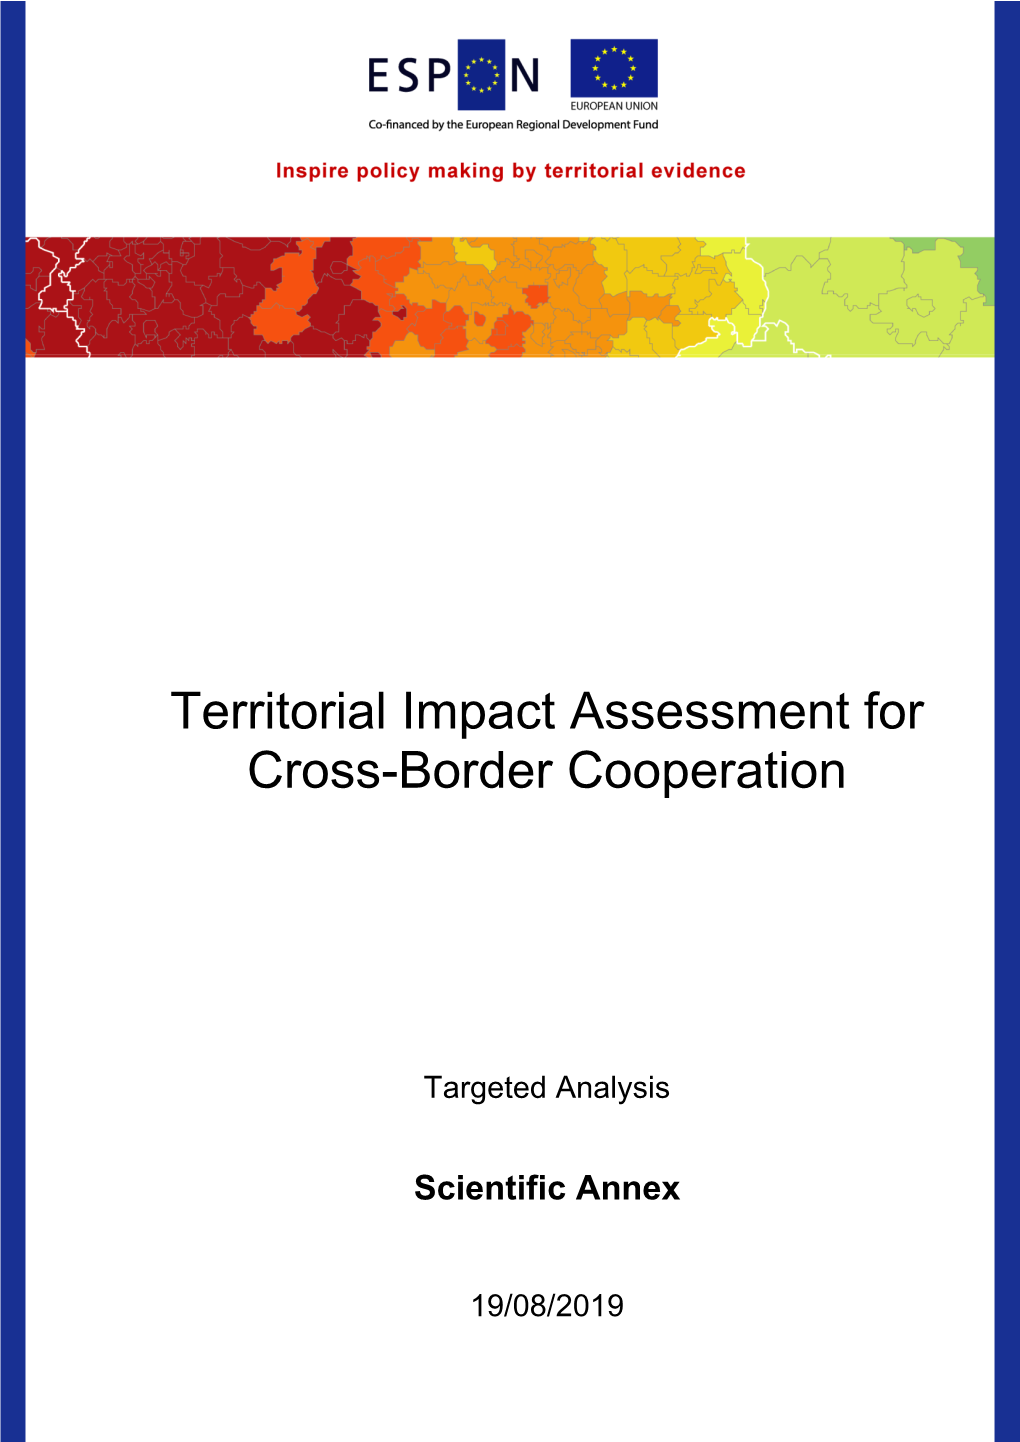 Territorial Impact Assessment for Cross-Border Cooperation